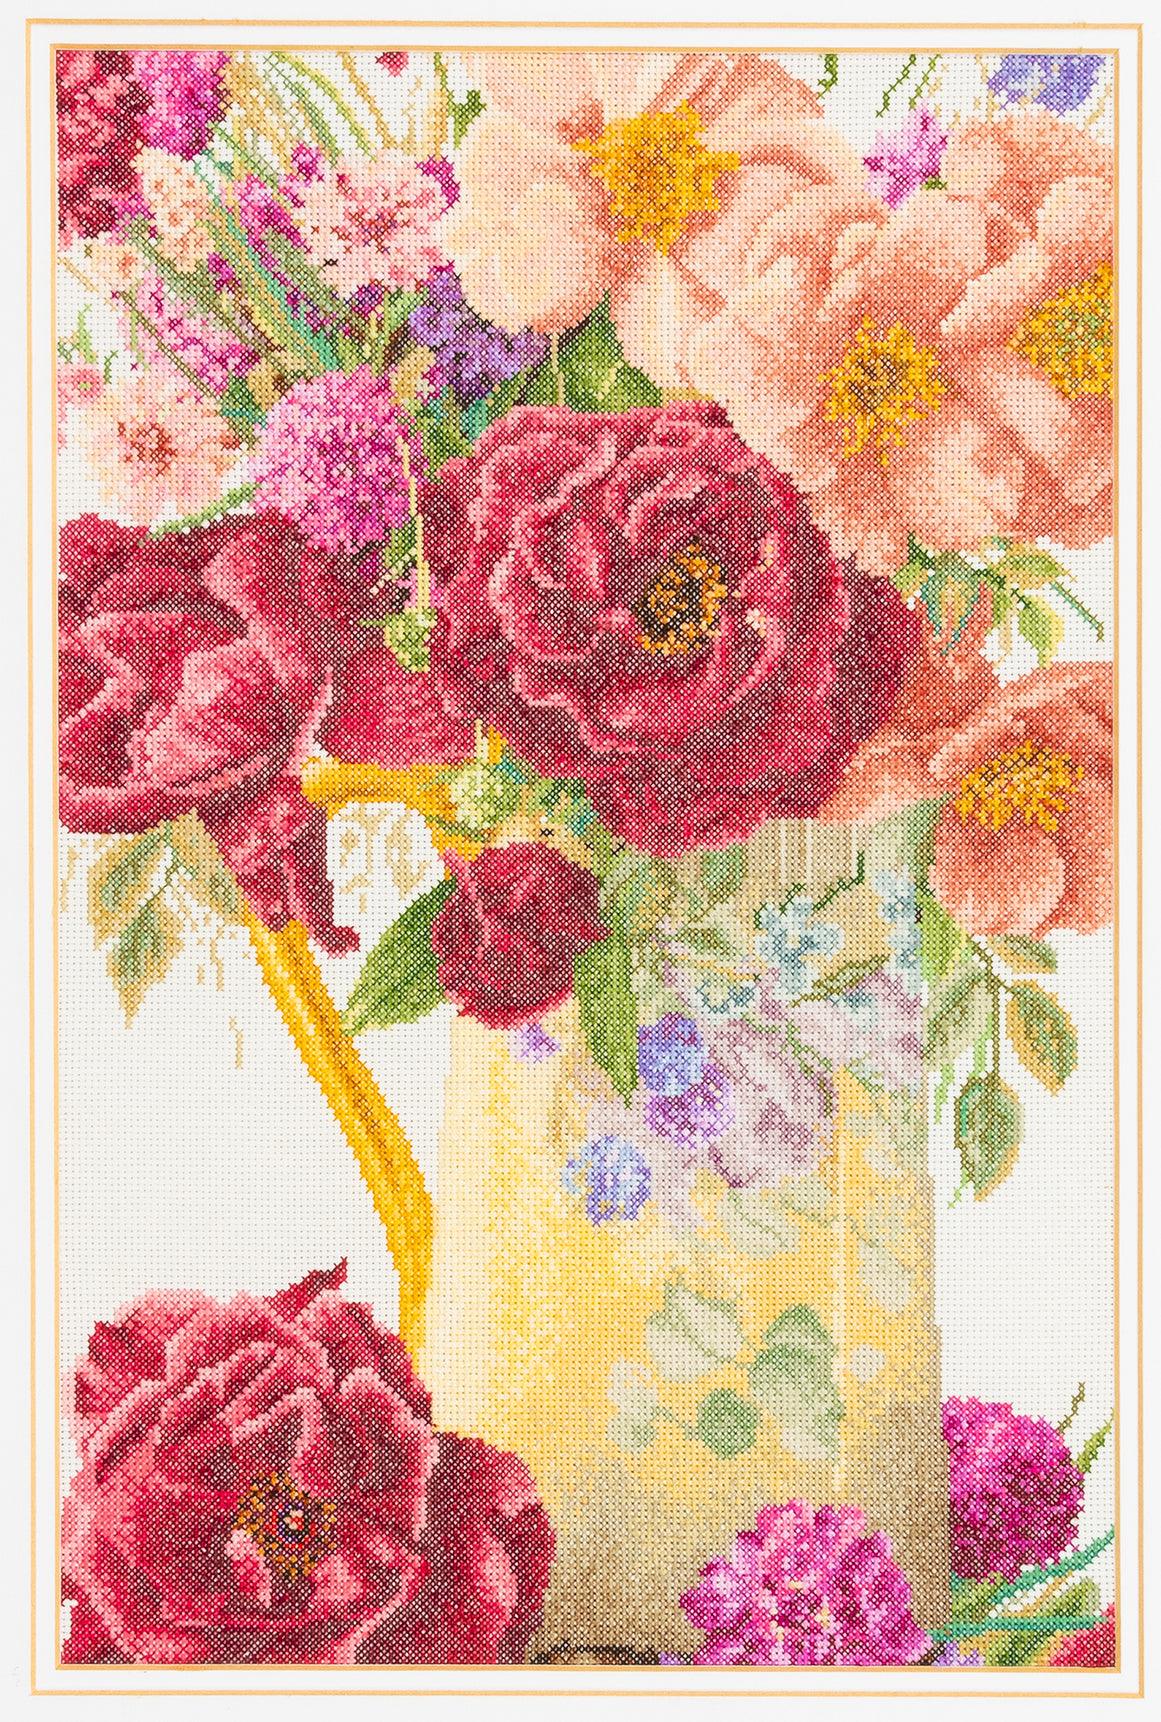 Thea Gouverneur - Counted Cross Stitch Kit - Rose Bouquet - Aida - 18 count - 3019A - Thea Gouverneur Since 1959